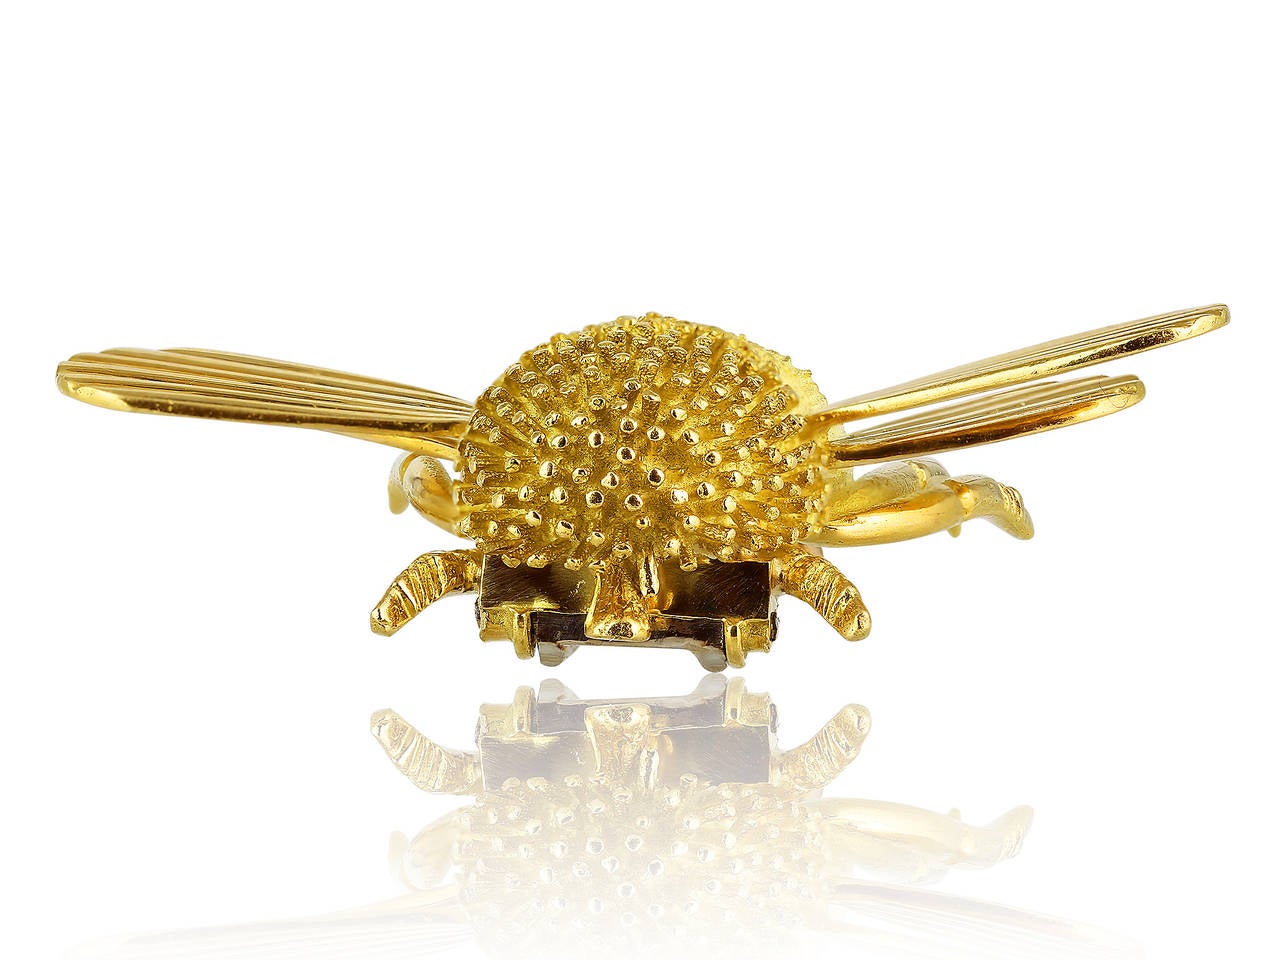 18 karat yellow gold textured bee estate pin with engraved details. Signed TURI